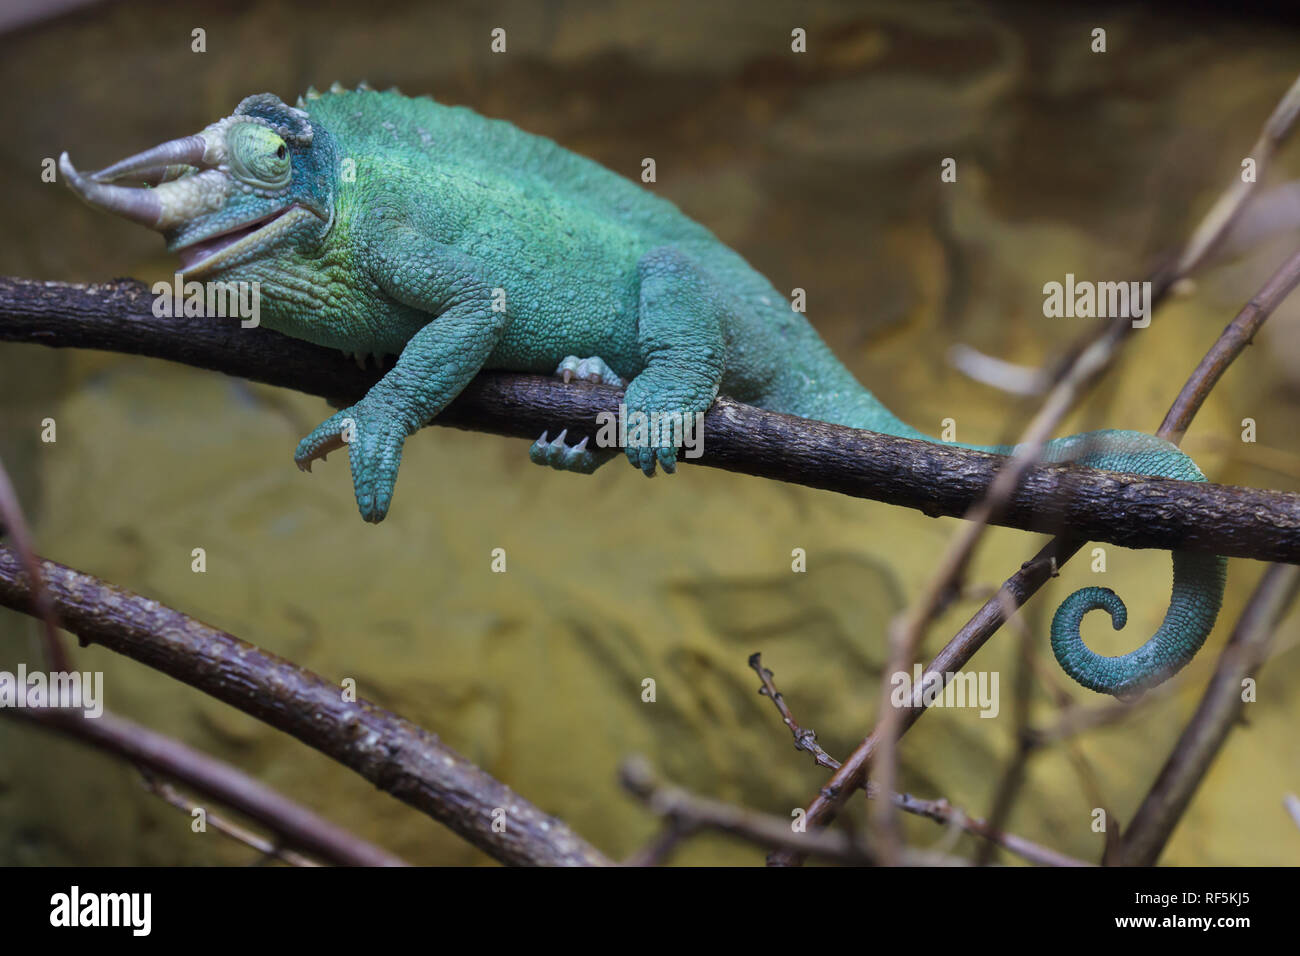 Jackson's chameleon (Trioceros jacksonii), also known as the Kikuyu three-horned chameleon. Stock Photo